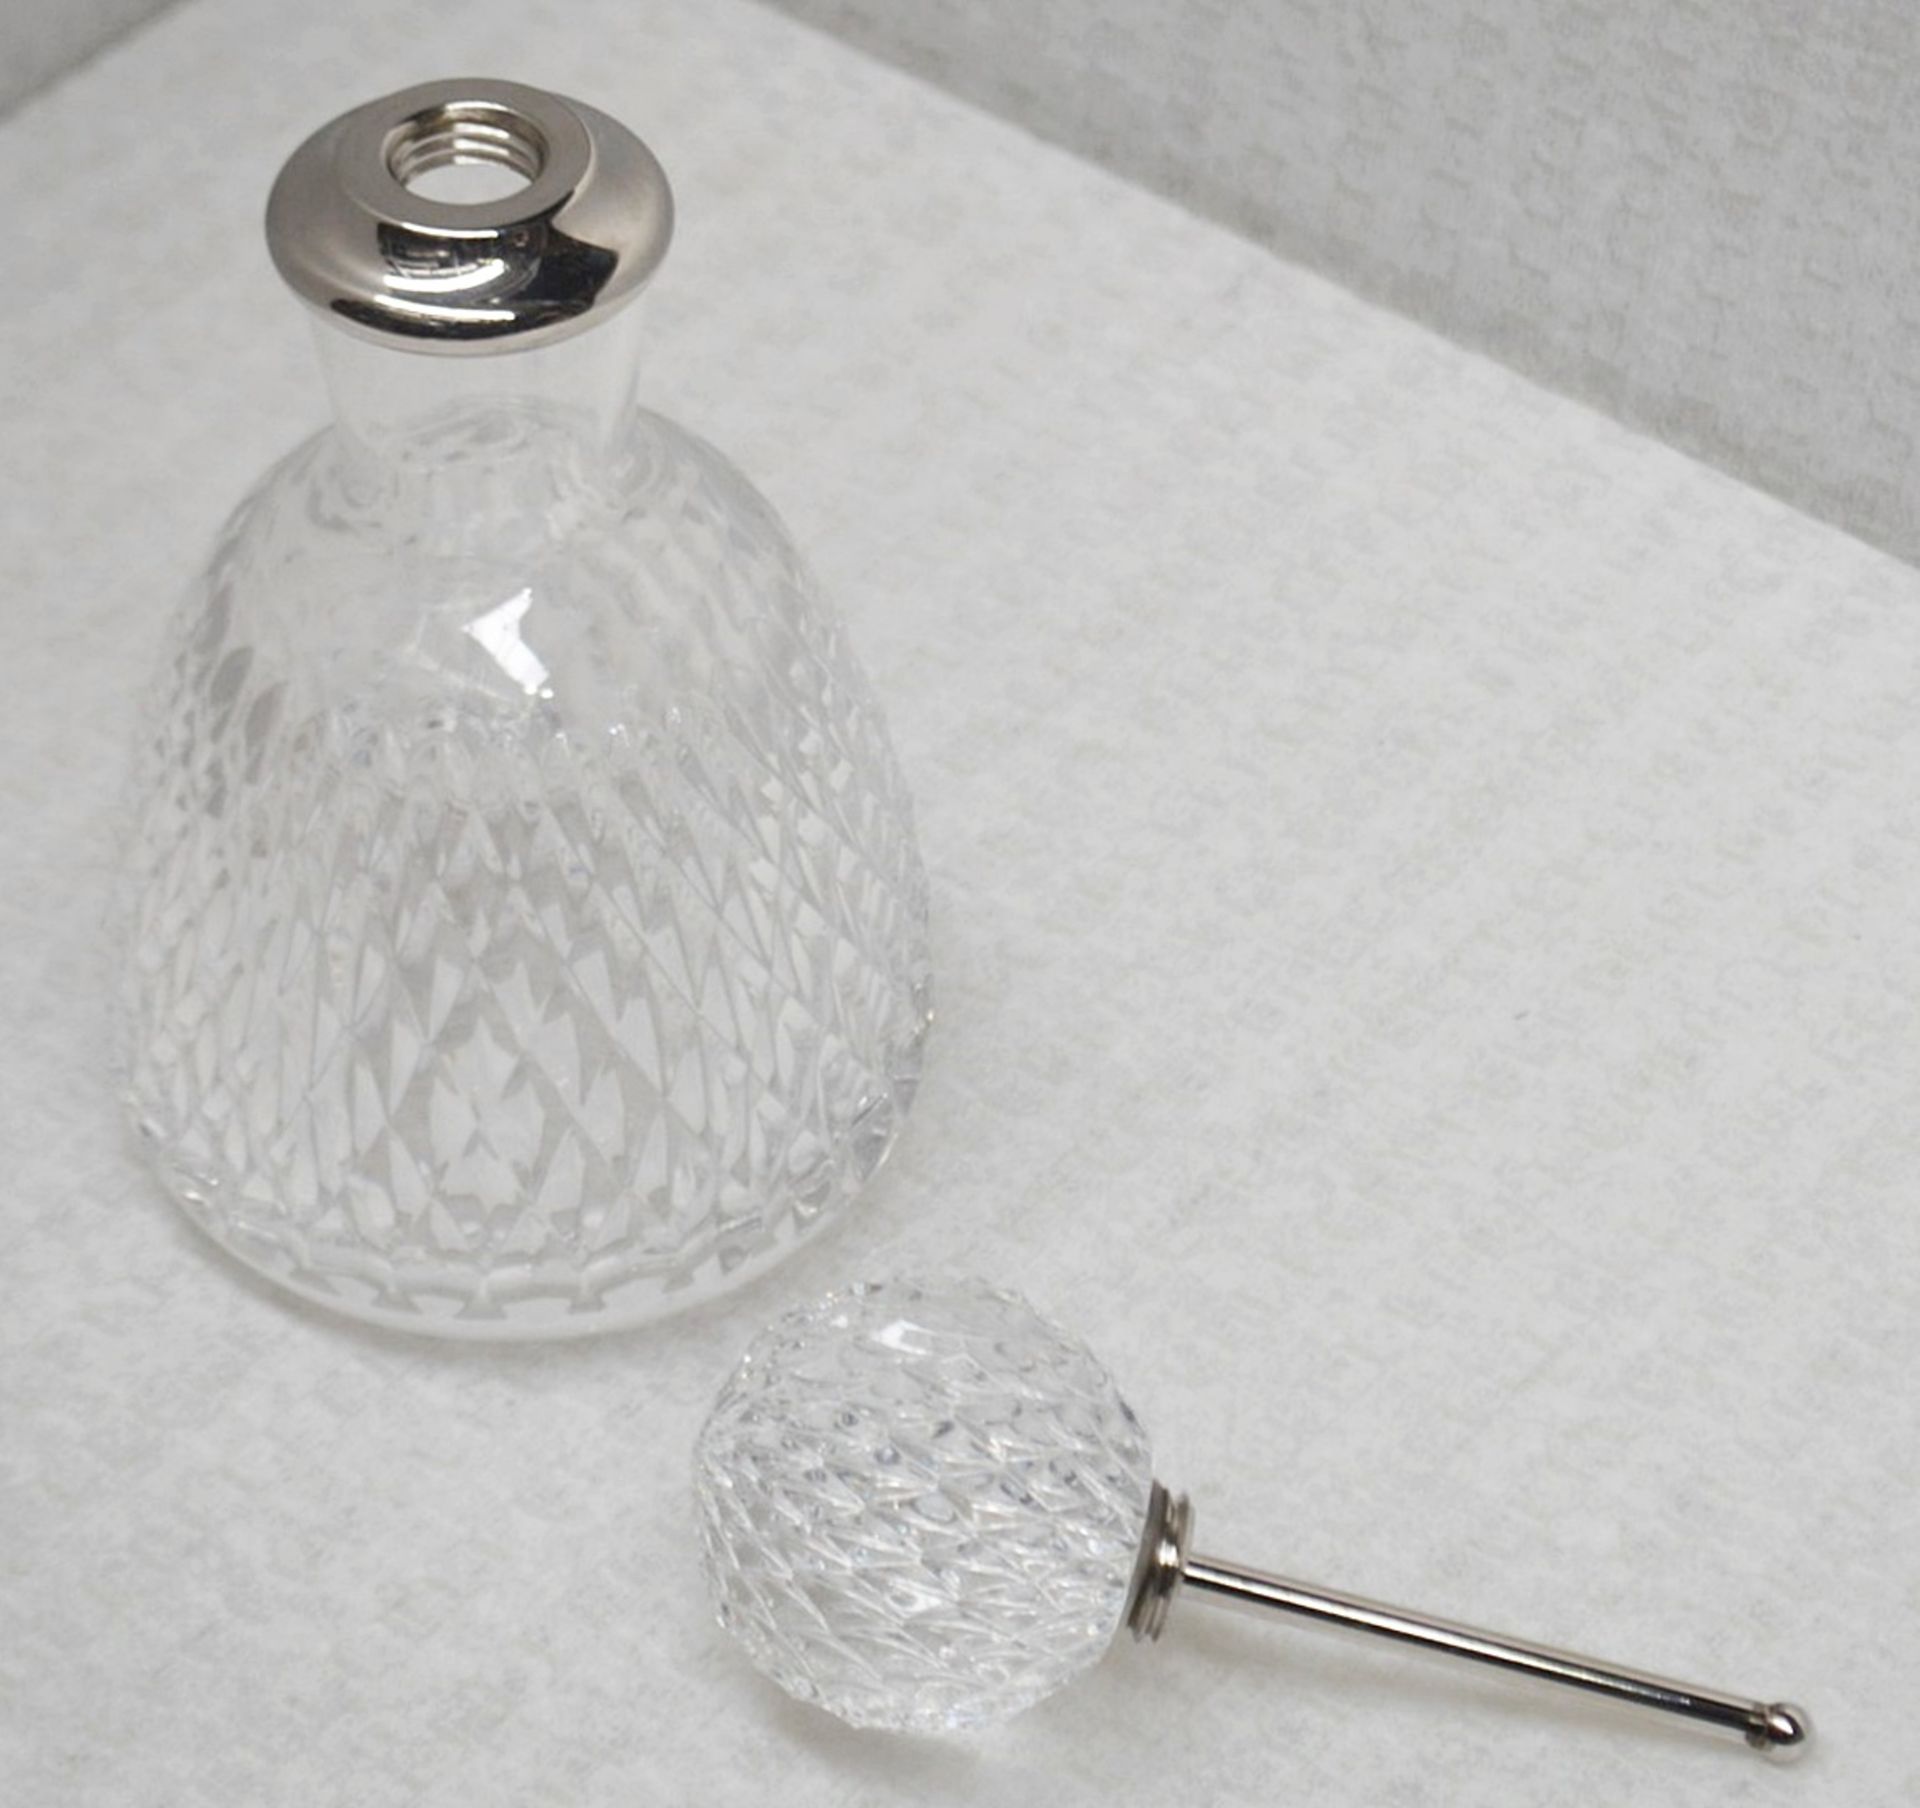 1 x BALDI 'Home Jewels' Italian Hand-crafted Artisan Clear Diamond Crystal Perfume Bottle & - Image 2 of 5